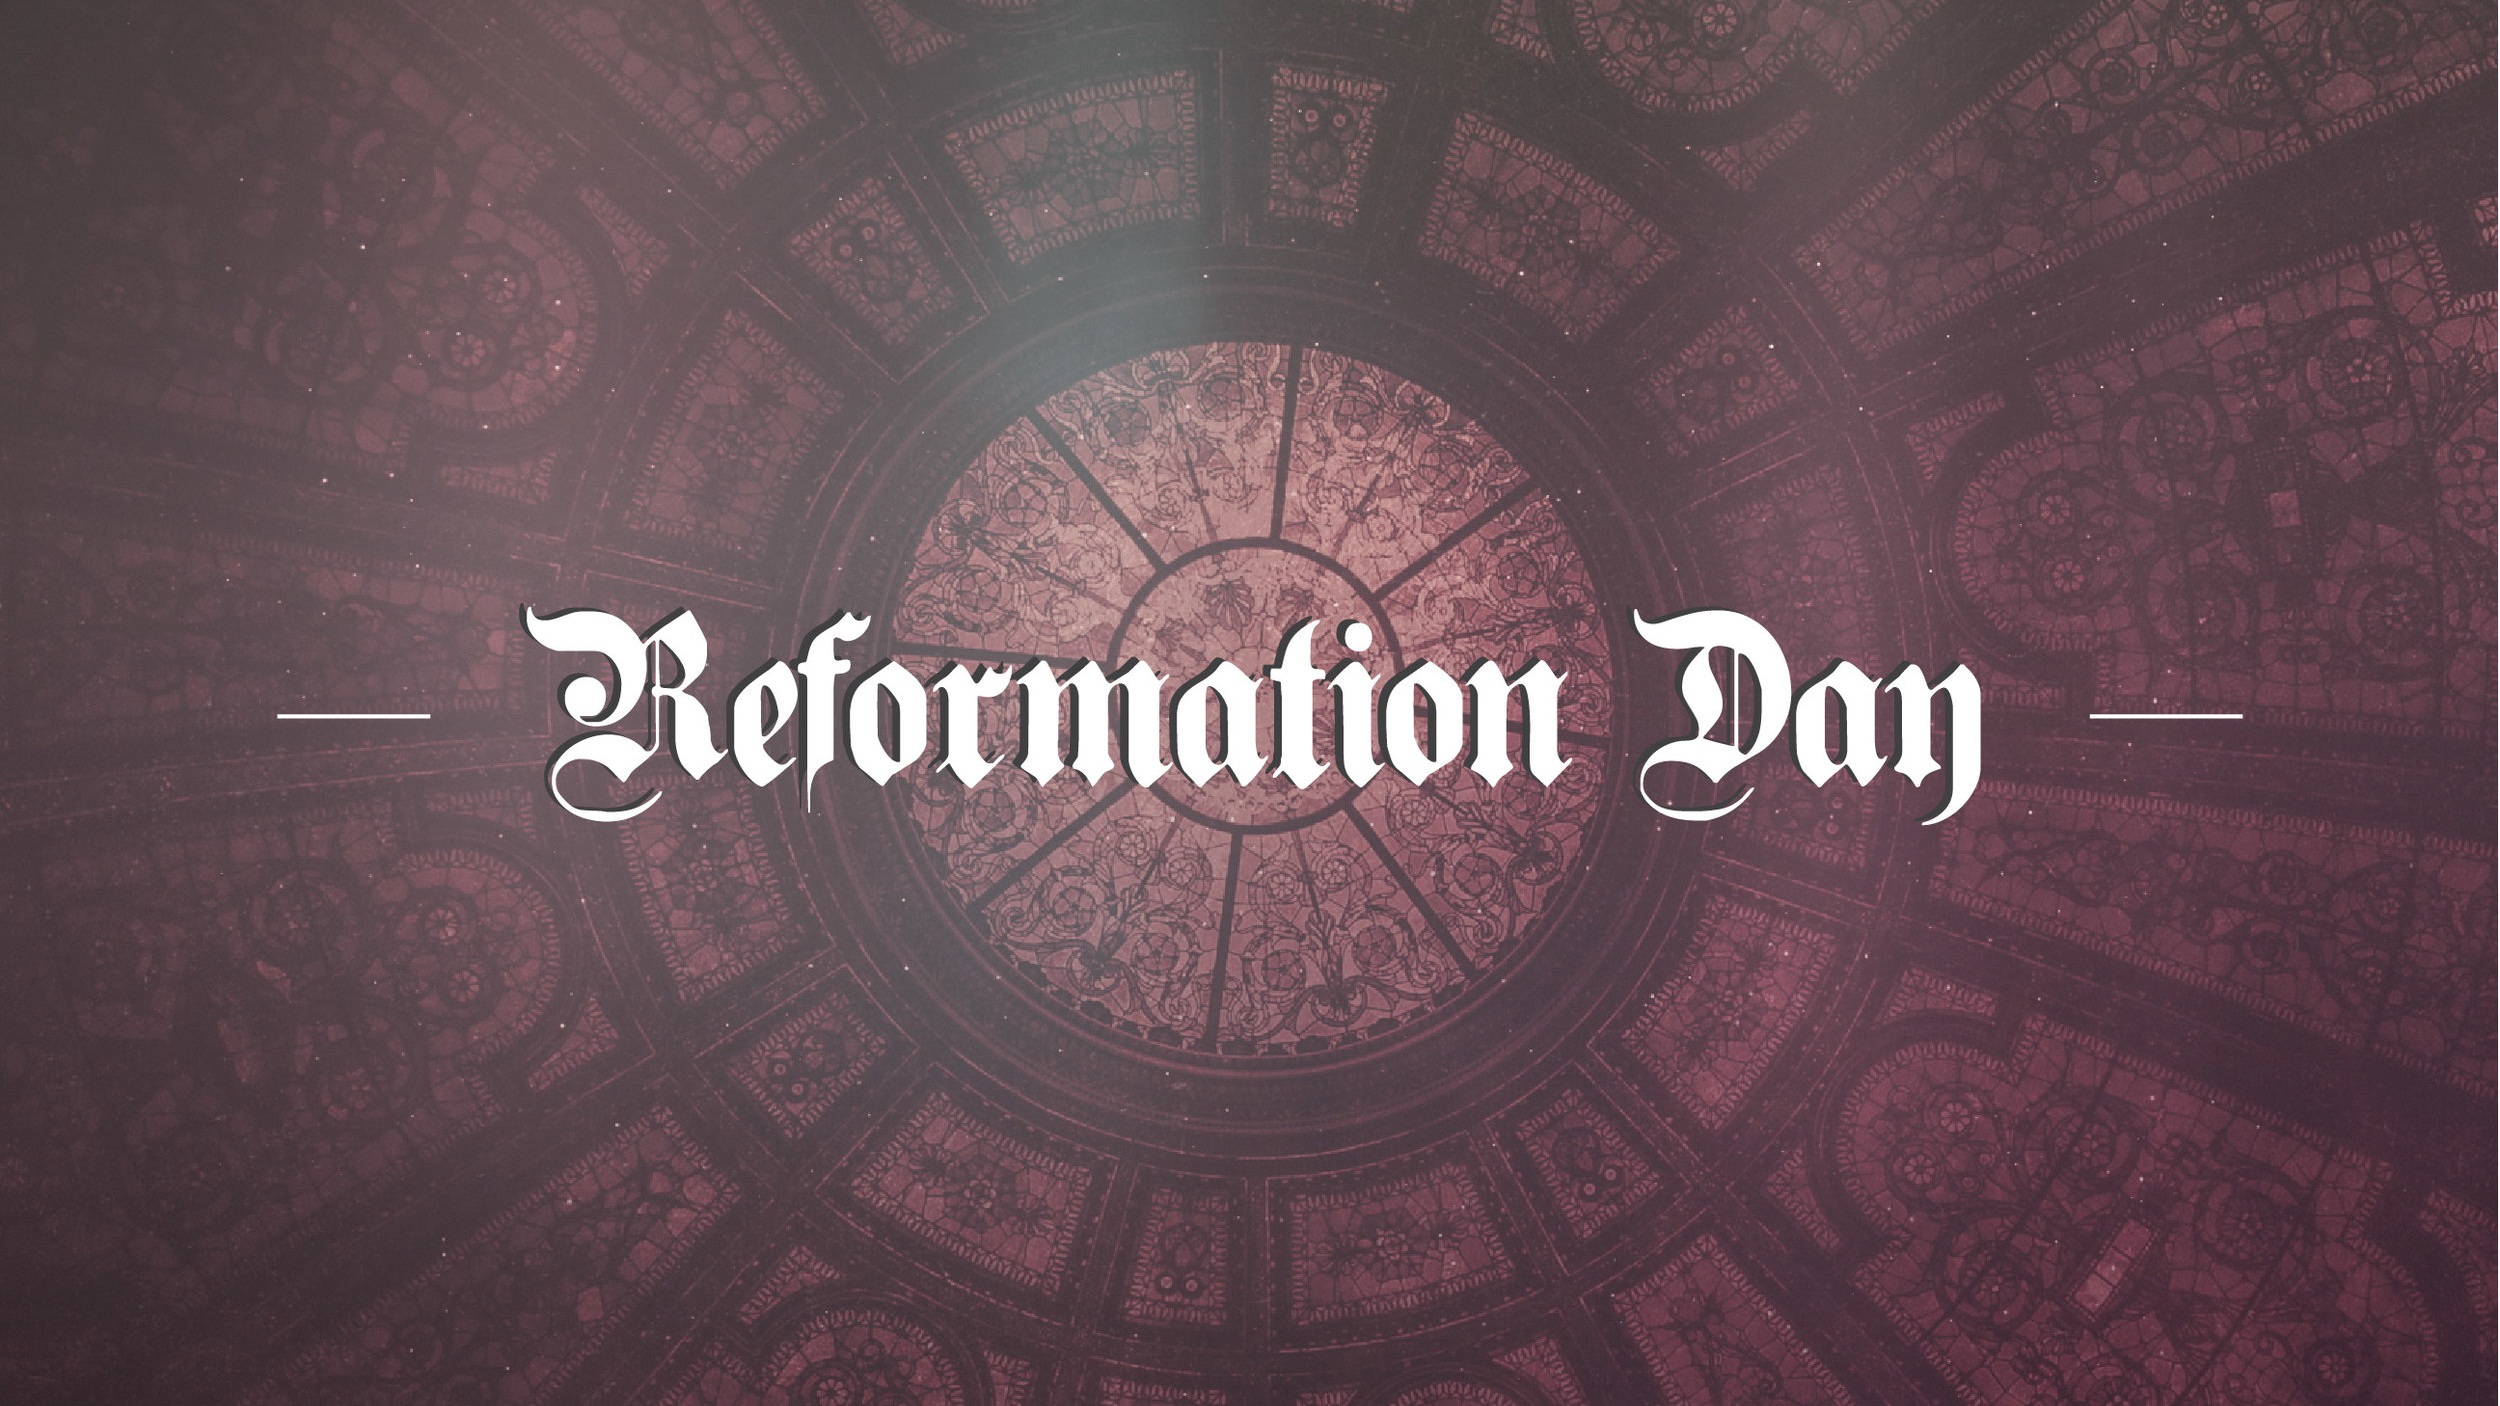 Reformation Day